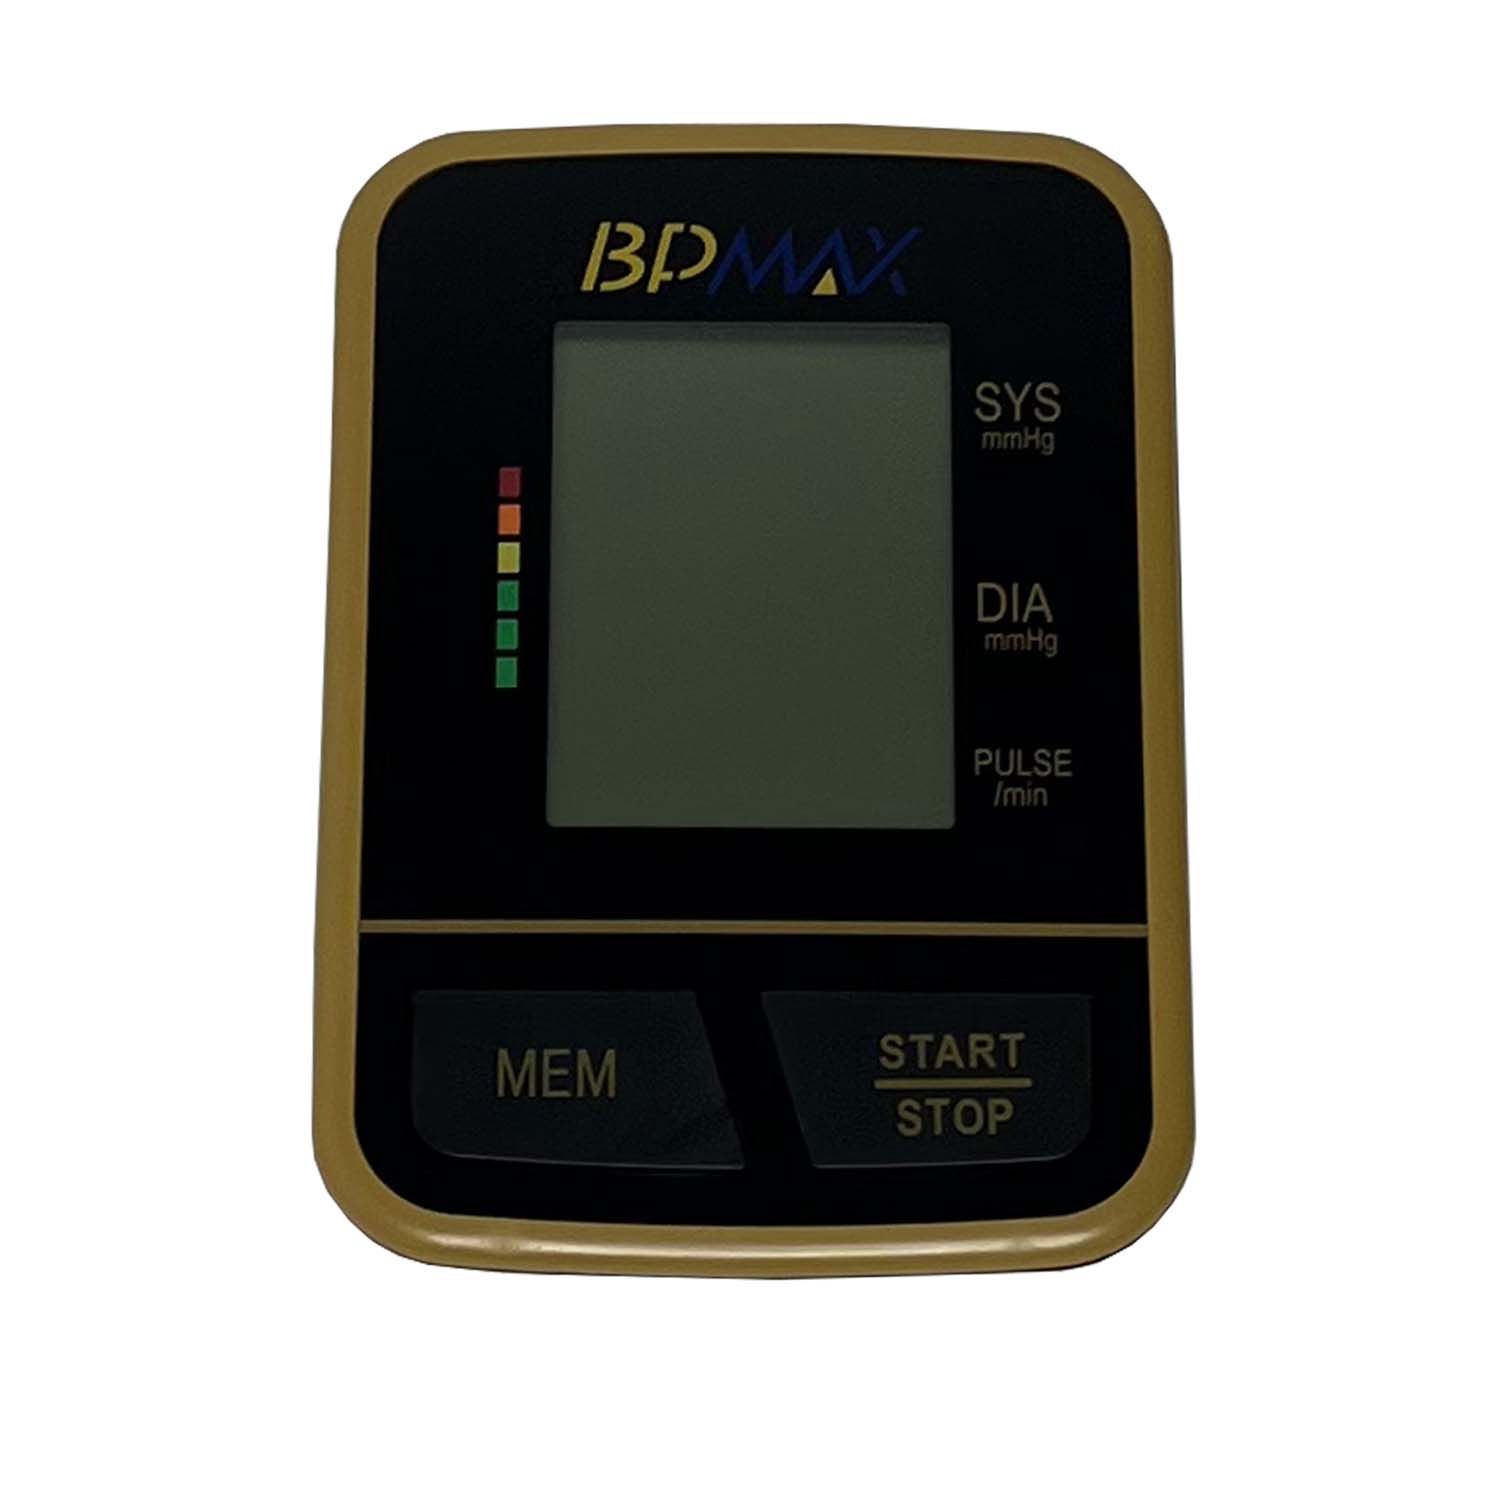 فشارسنج دیجیتال بی پی مکس مدل DBP-1231 به همراه کاف اضافه